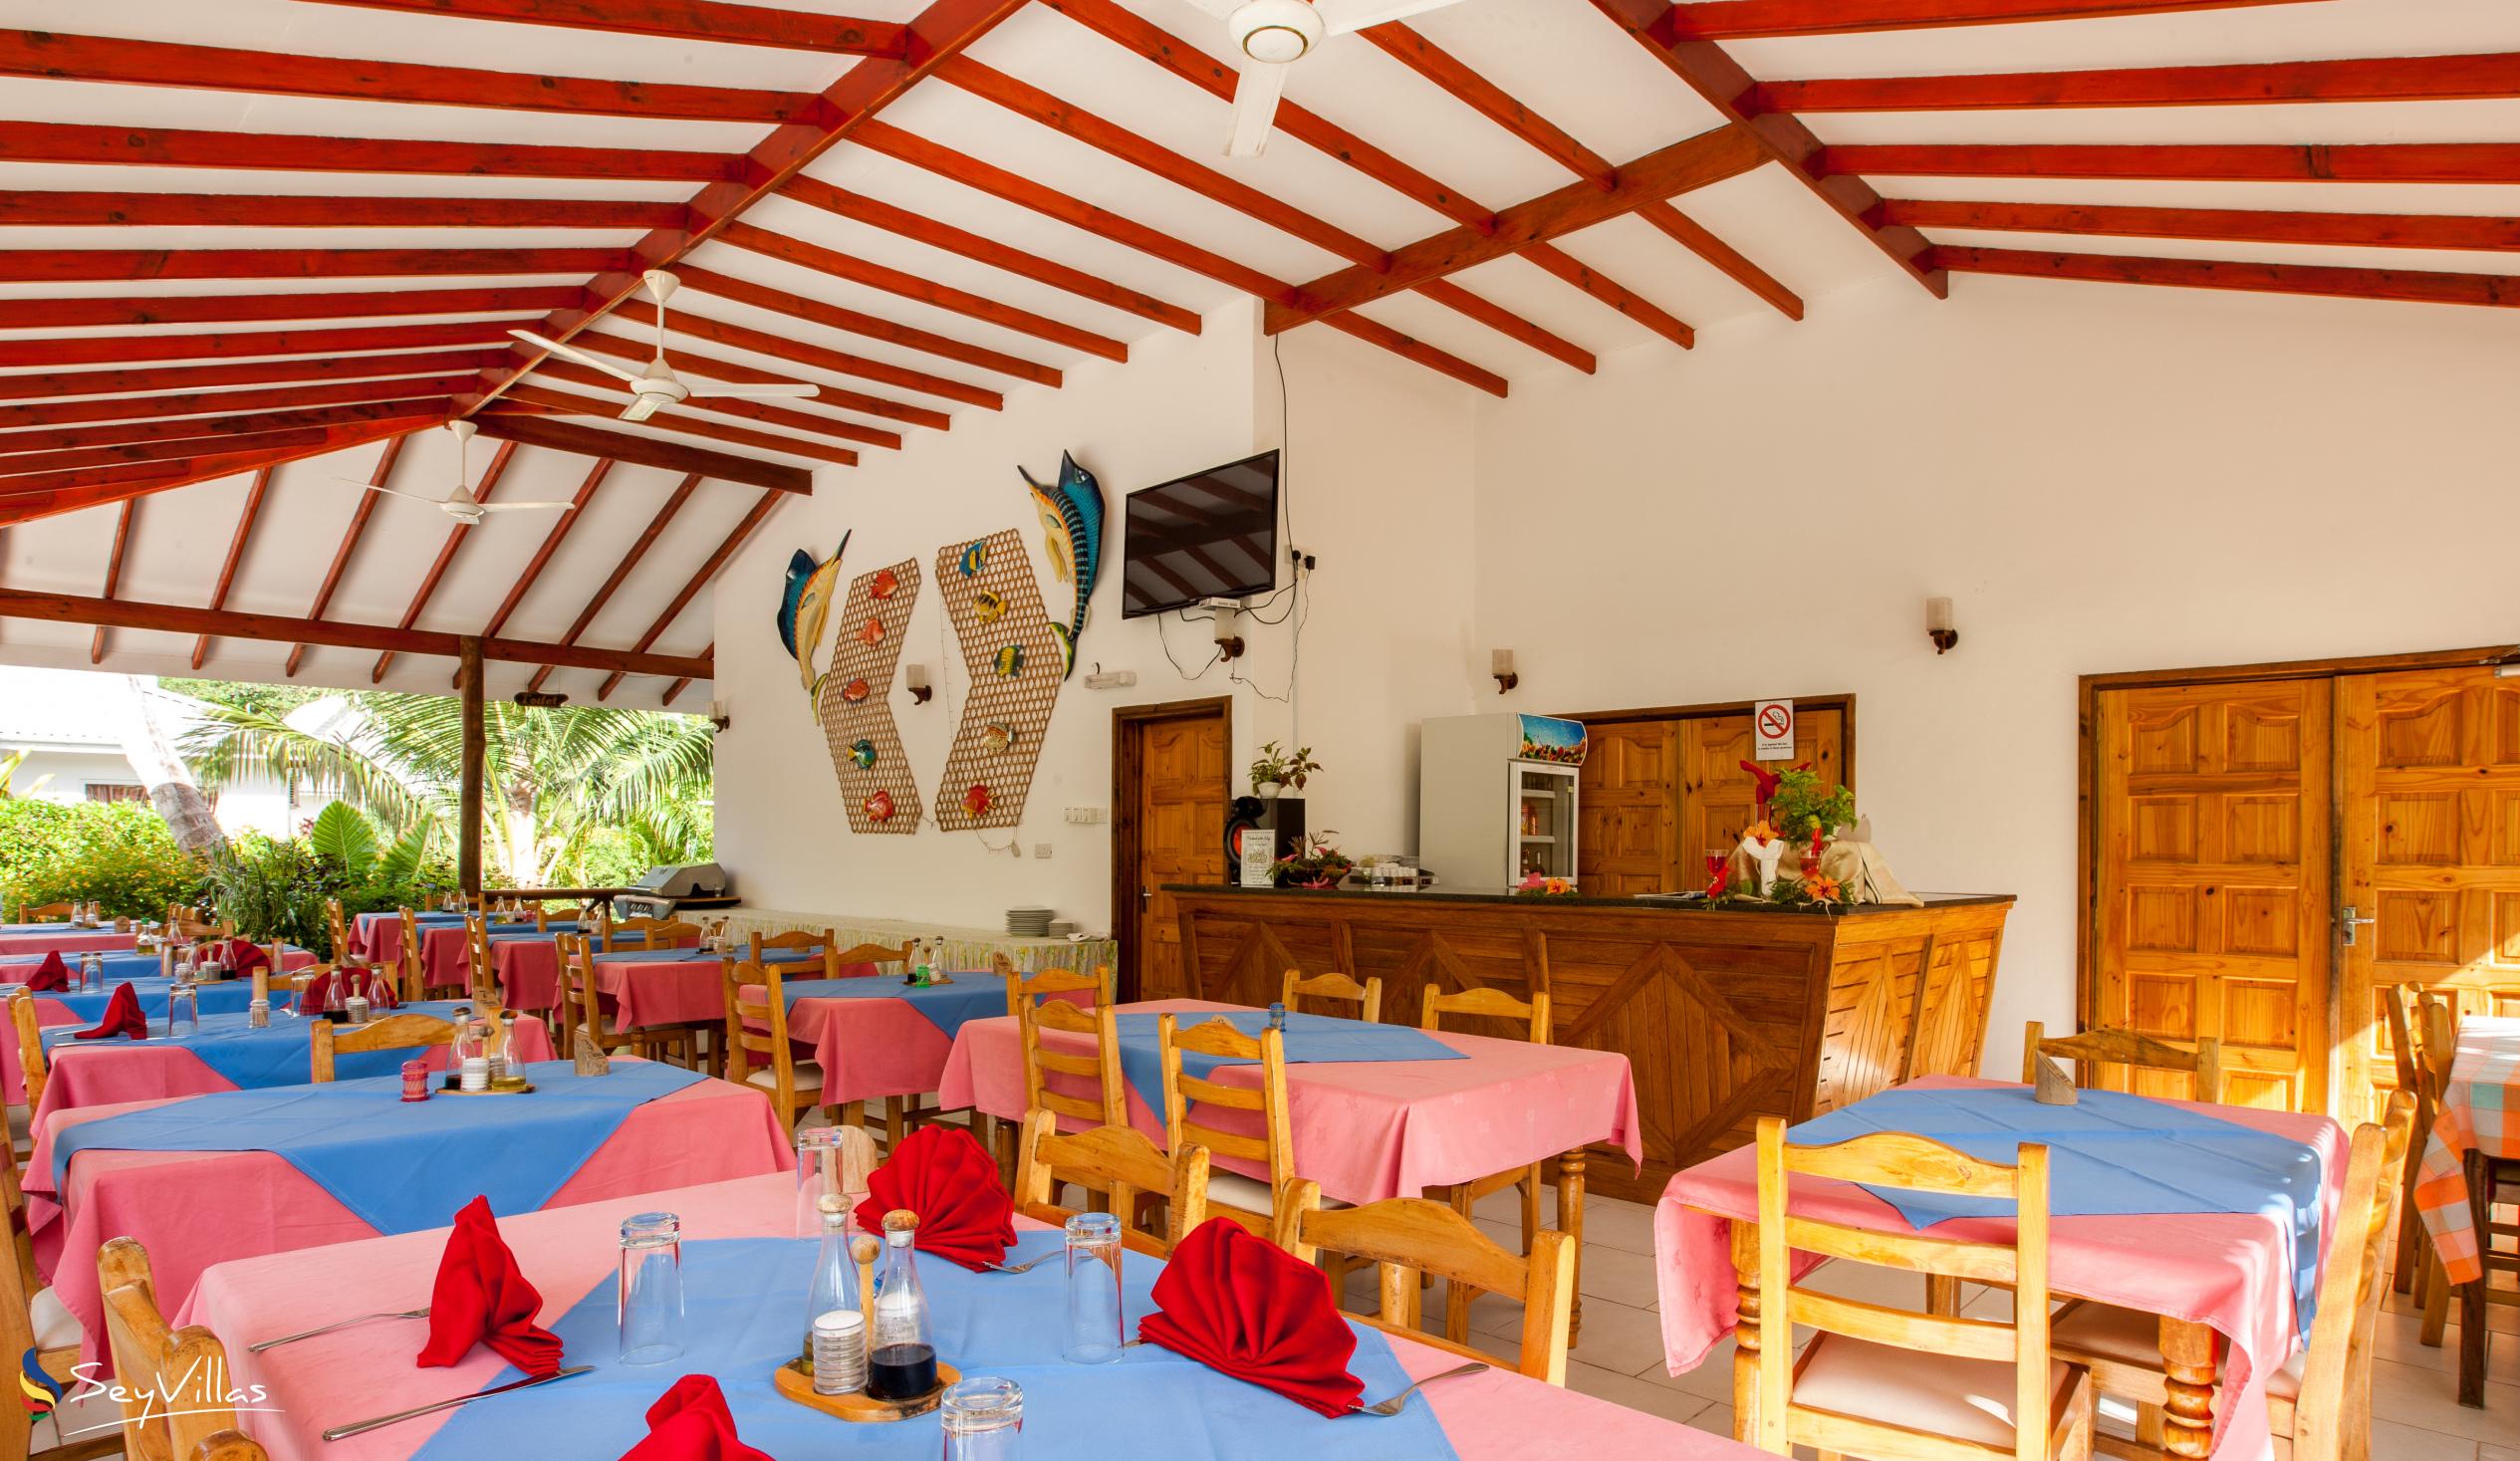 Photo 24: Villa Veuve - Indoor area - La Digue (Seychelles)